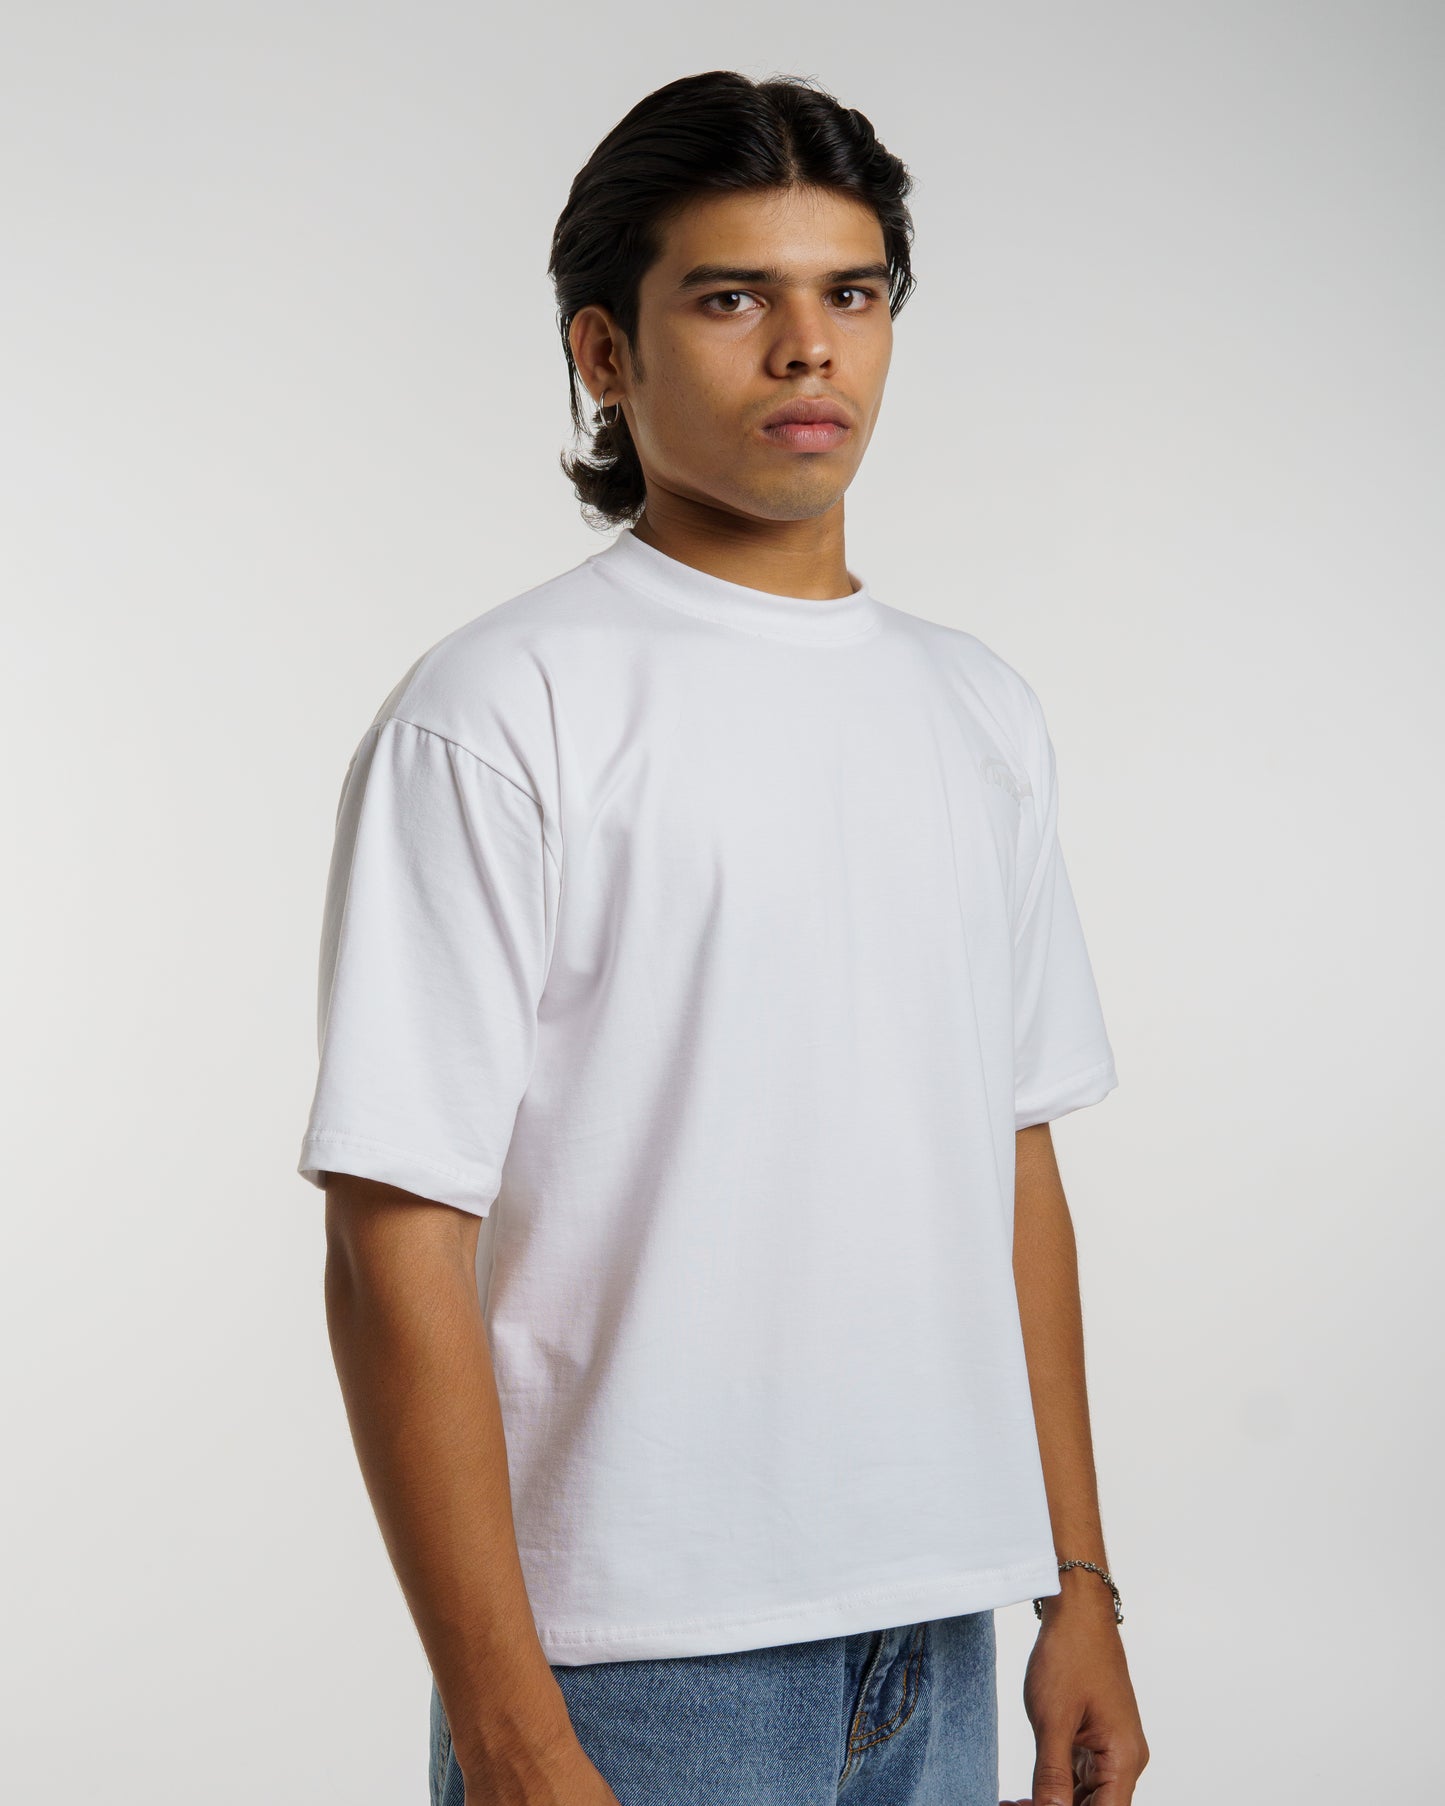 Cropped T-shirt (White)